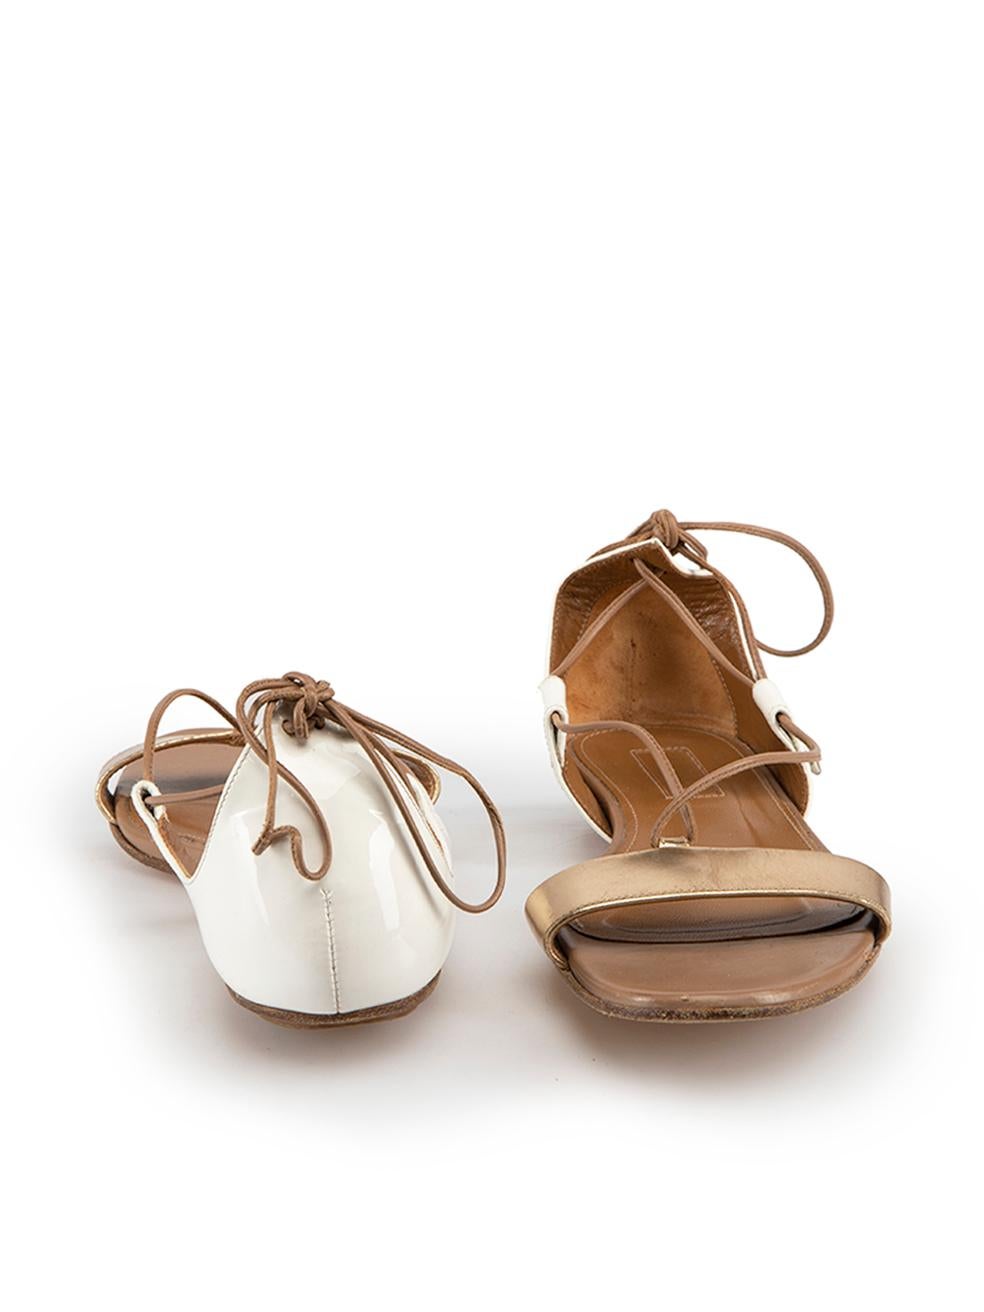 Aquazzura White Patent Leather Strappy Sandals Size EU 36 In Good Condition For Sale In London, GB